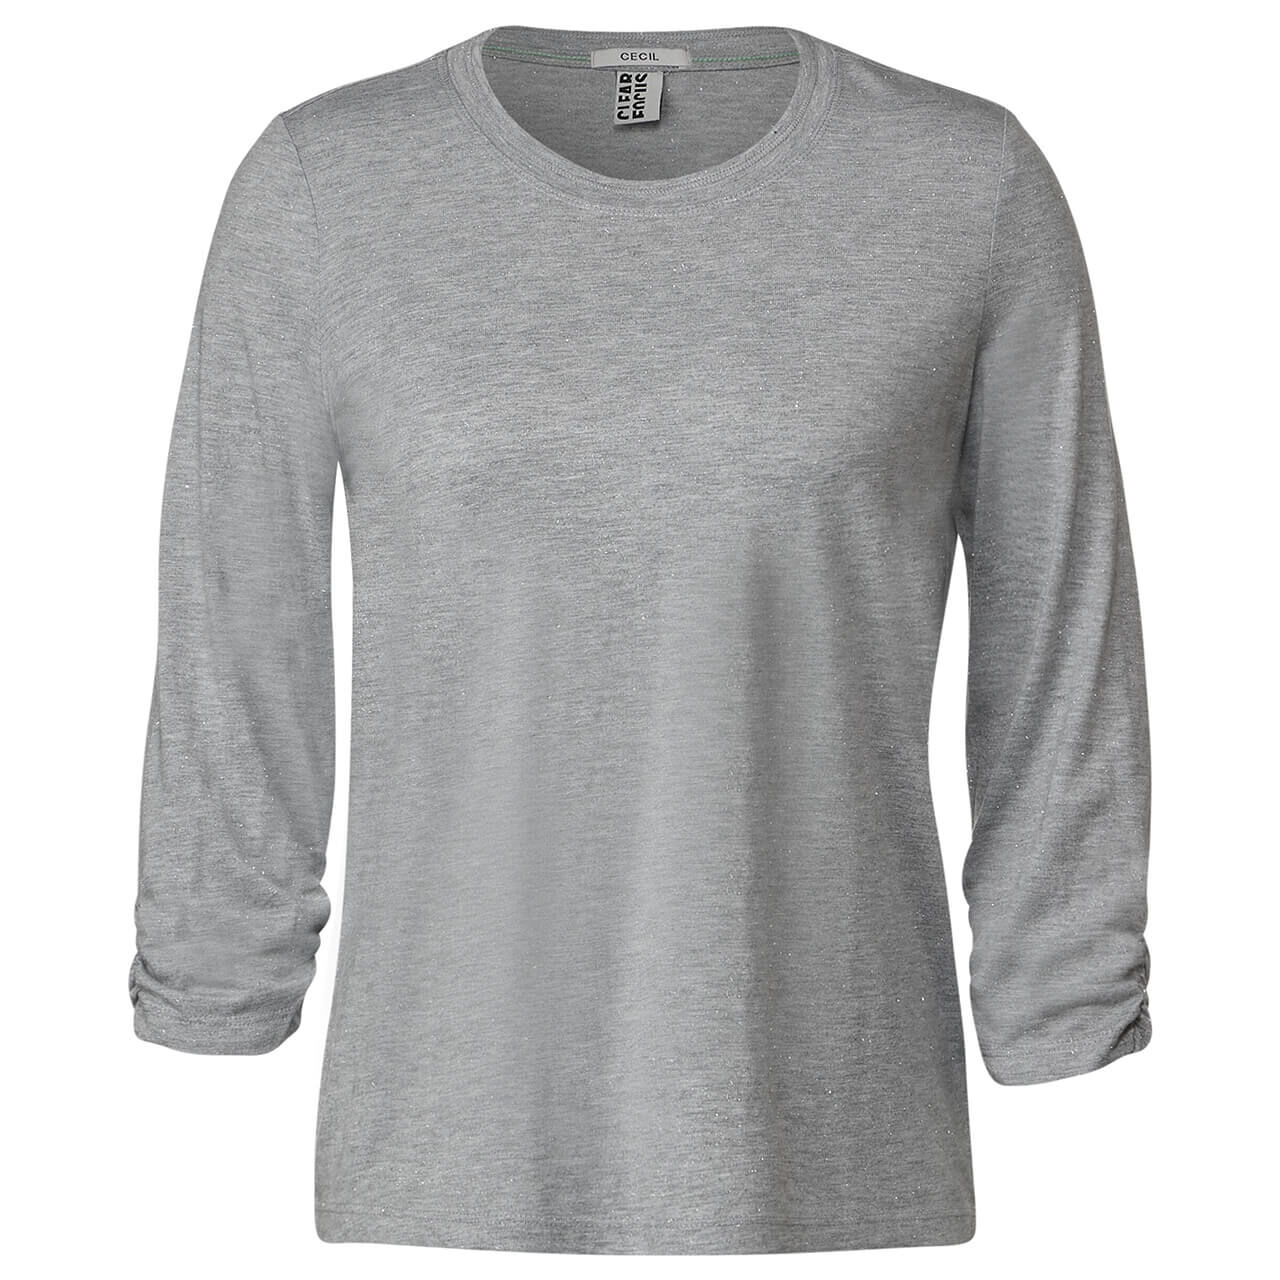 Cecil Damen 3/4 Arm Shirt Basic Glitter mineral grey melange